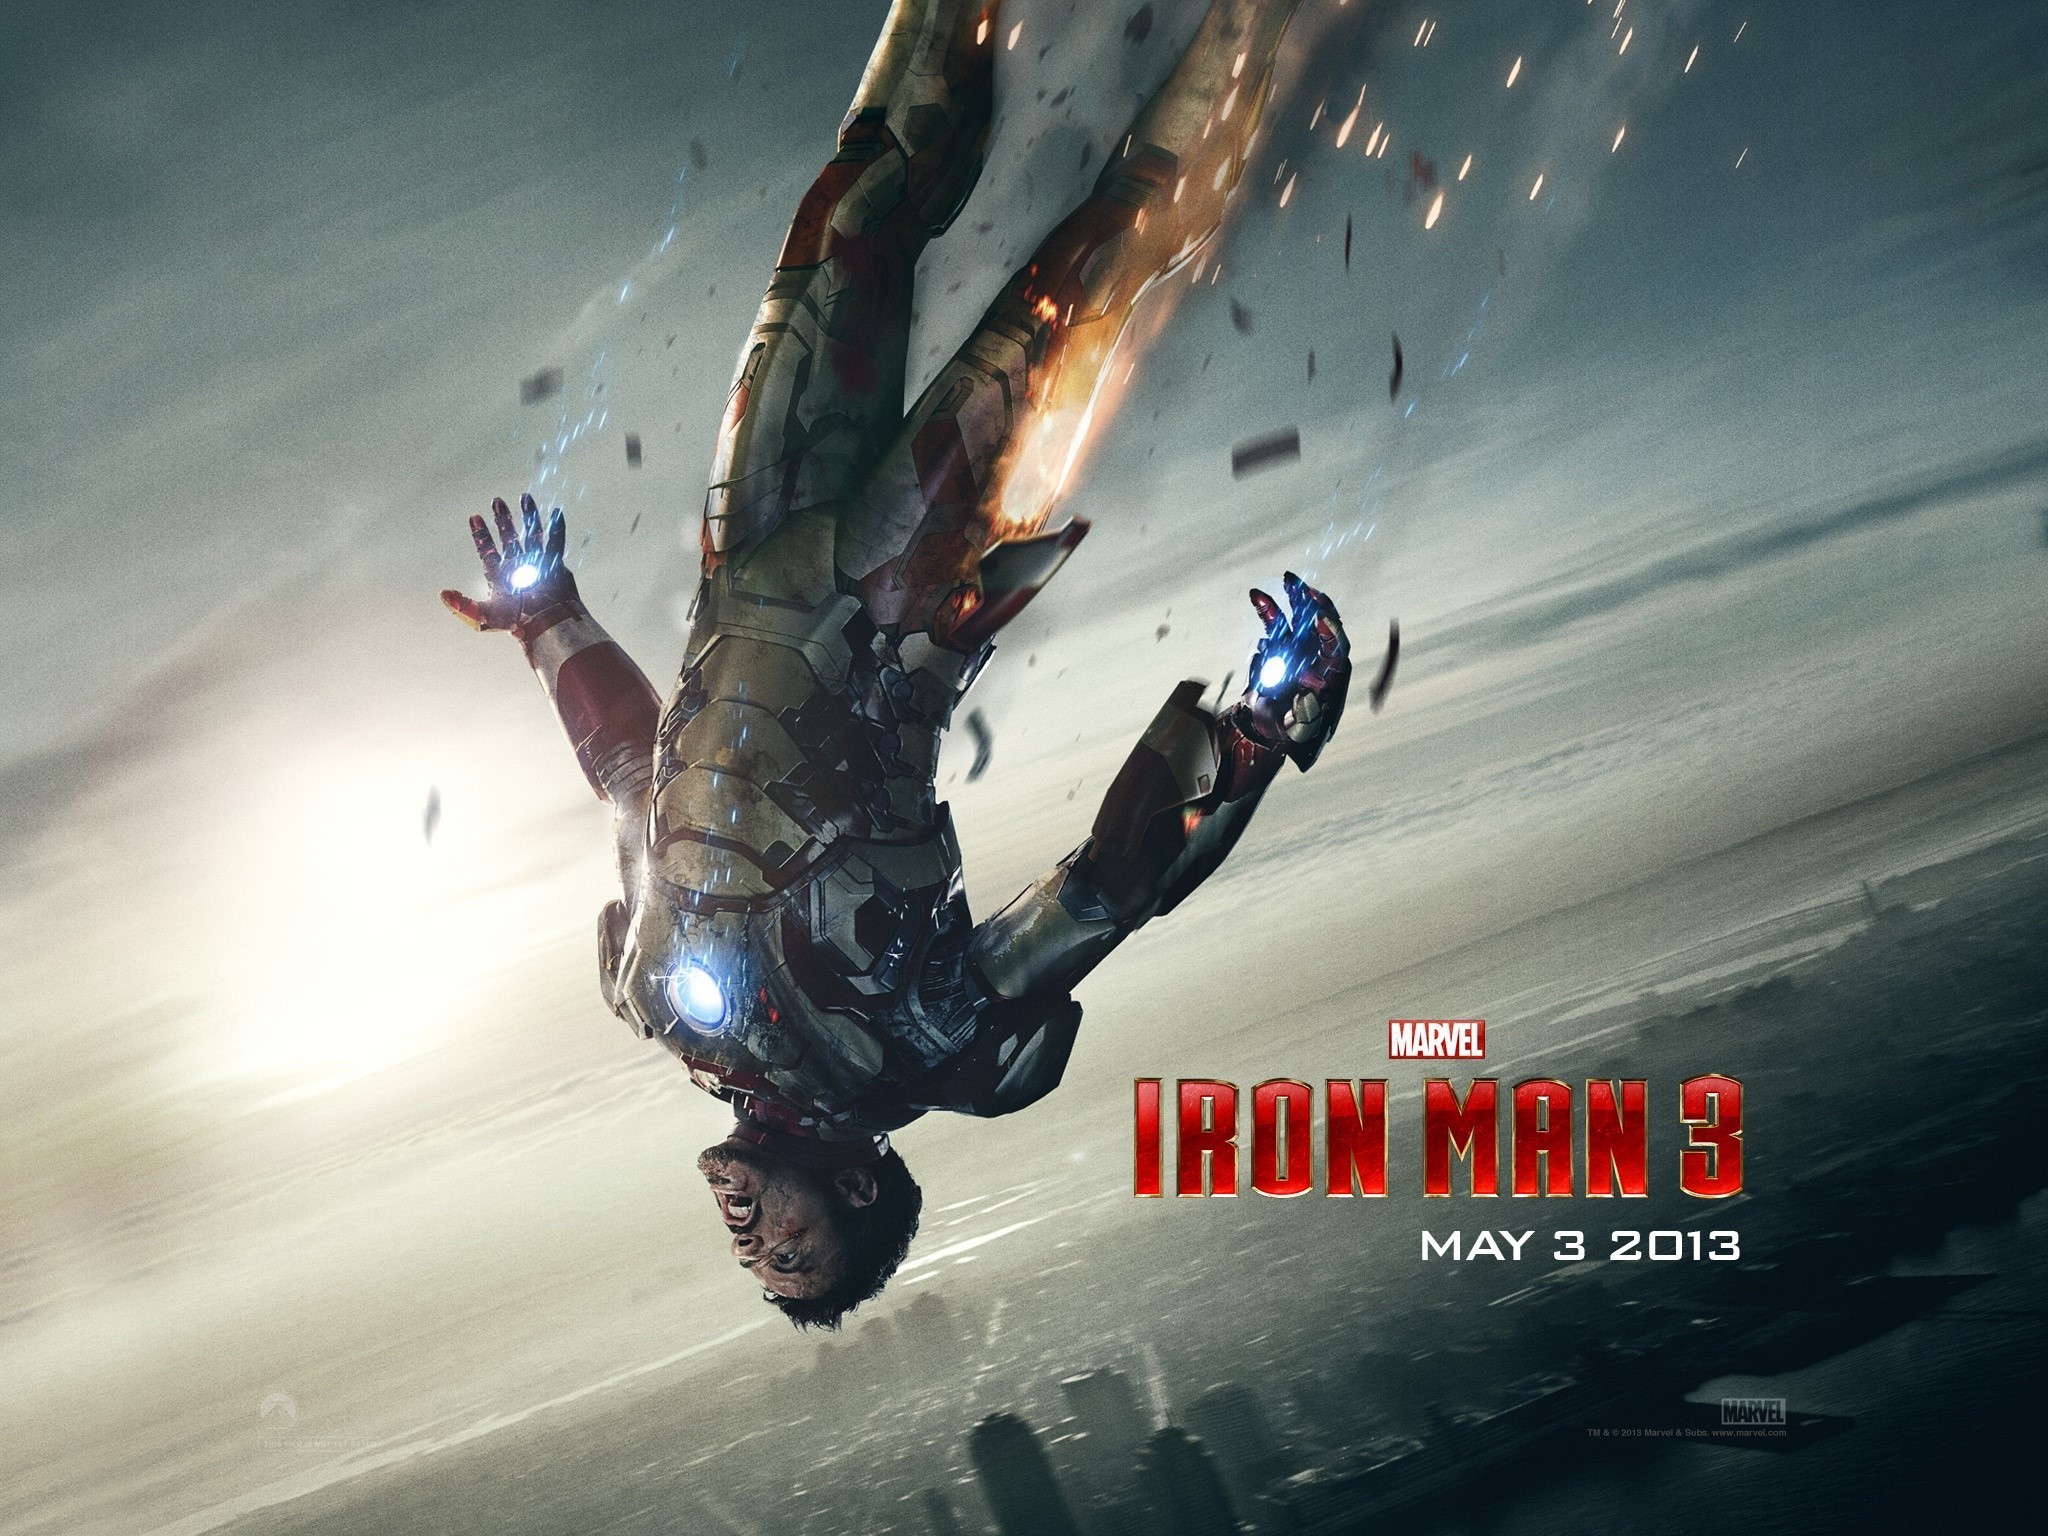 2048x1536 Wallpaper Tony Stark en Iron man 3 Images